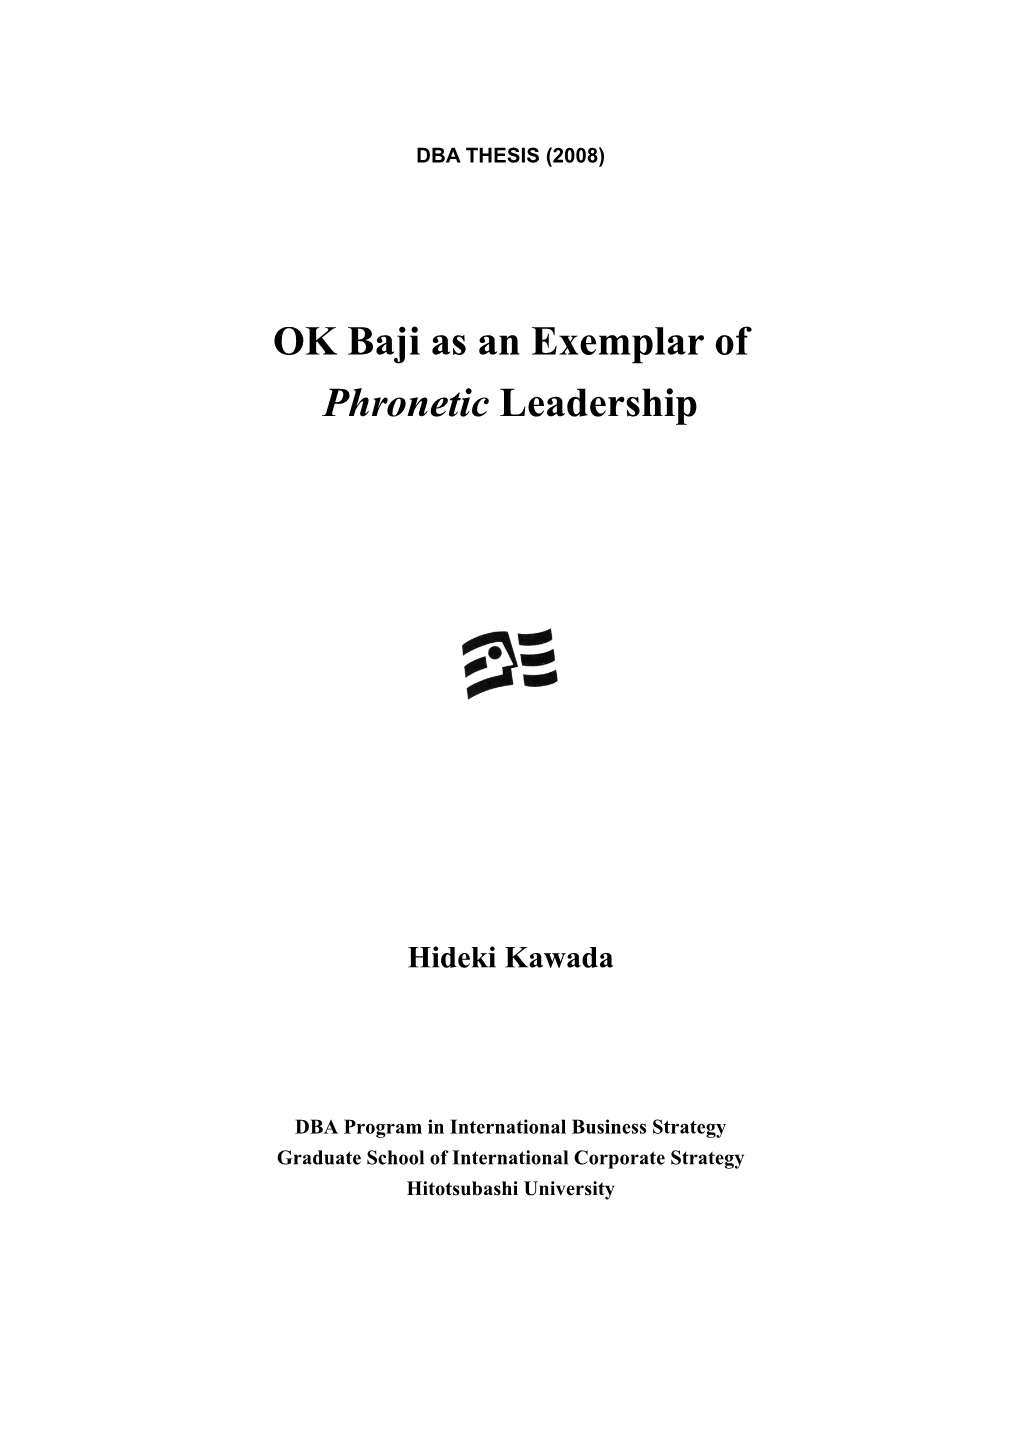 OK Baji As an Exemplar of Phronetic Leadership